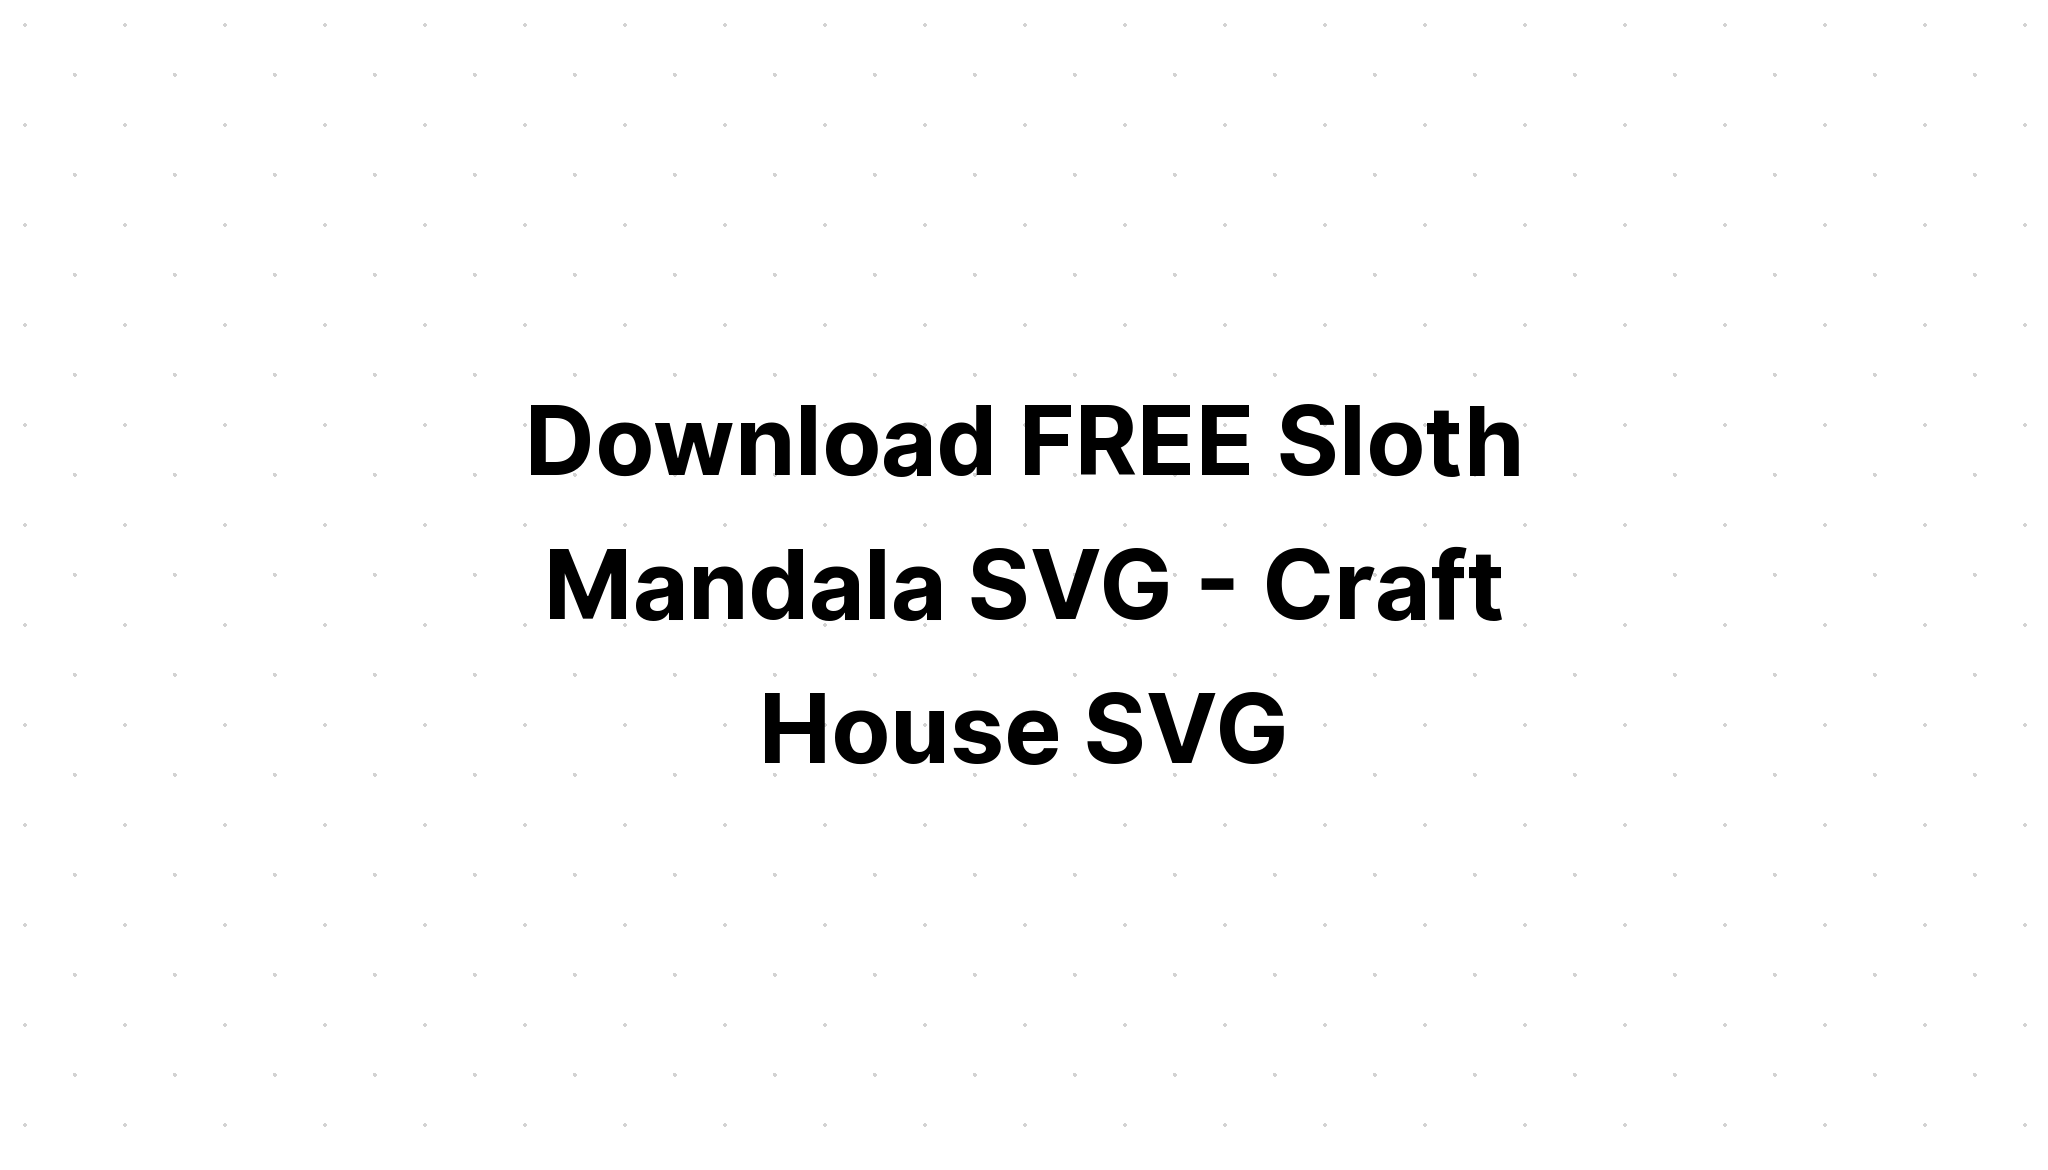 Download Michigan Mandala Svg Free For Crafters - Layered SVG Cut File